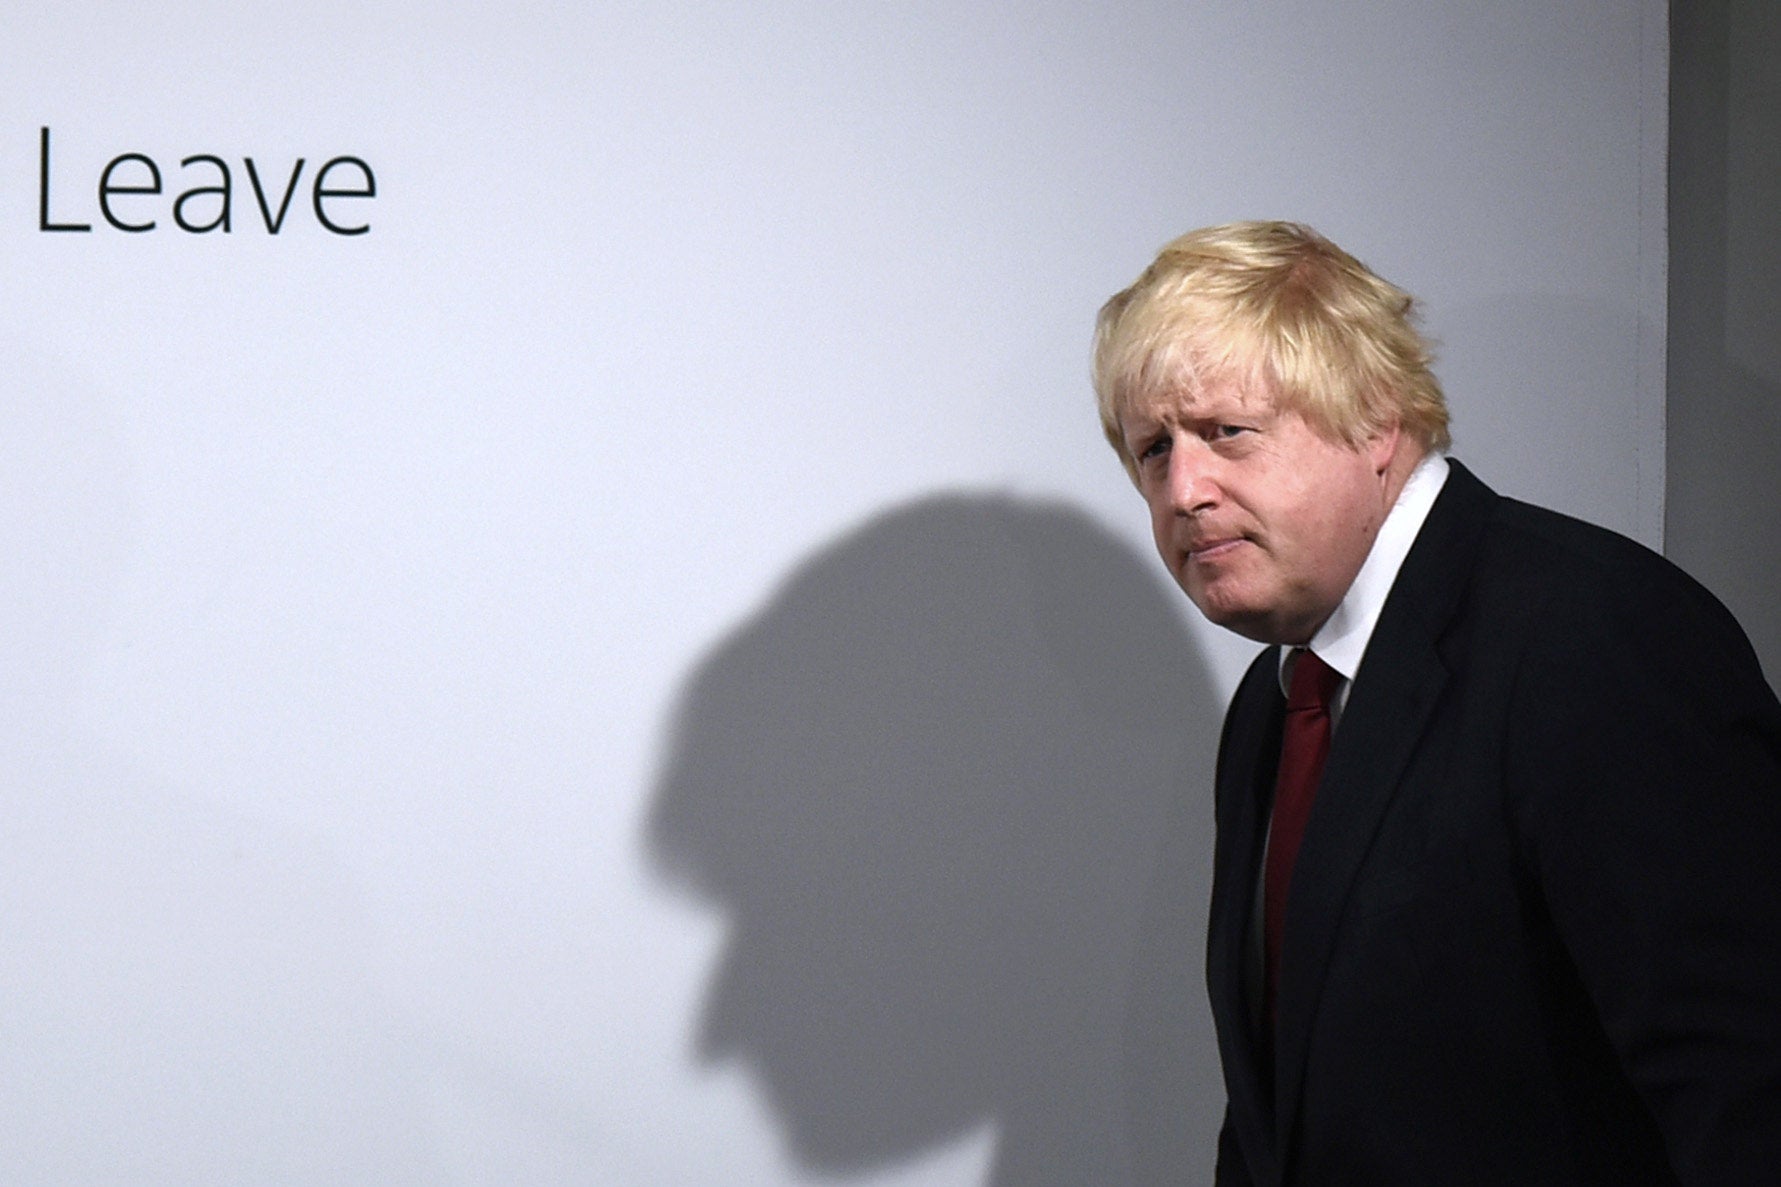 Boris Johnson arrives to speak following the results of the EU referendum